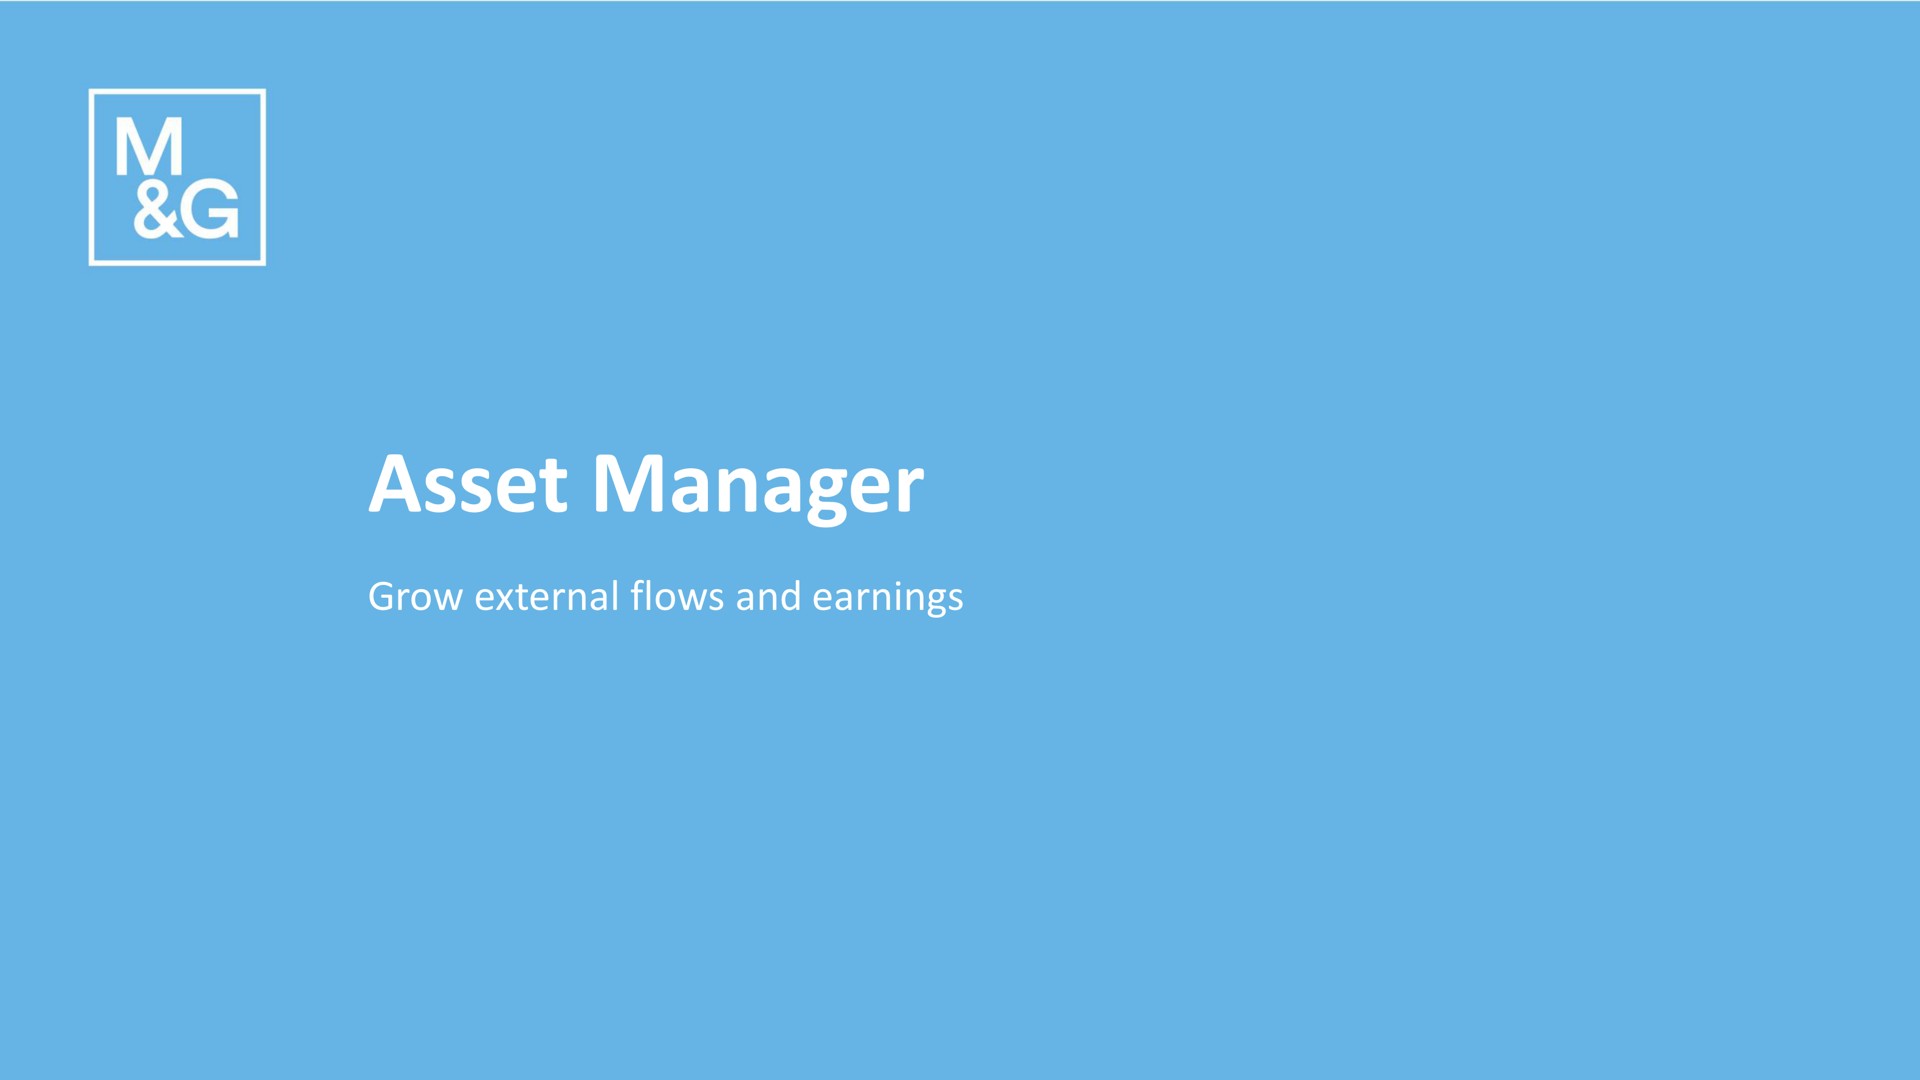 asset manager | M&G